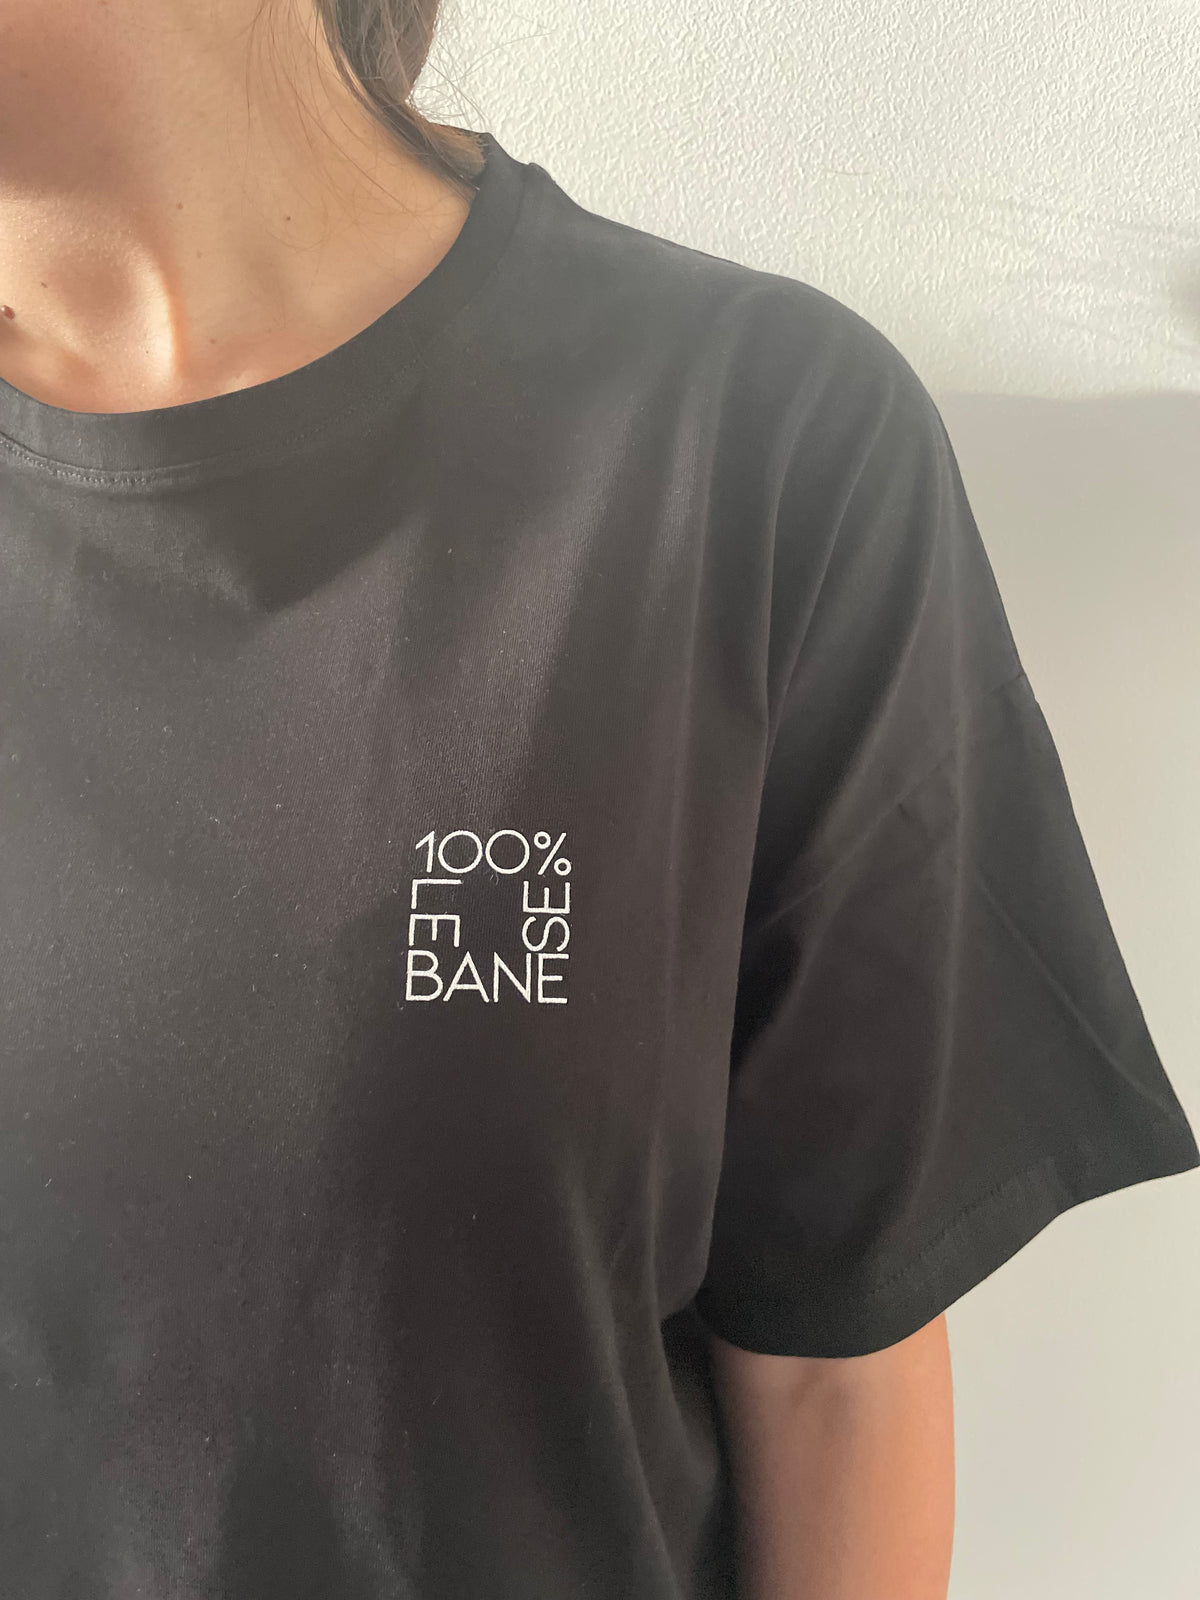 The 100% Lebanese T-Shirt